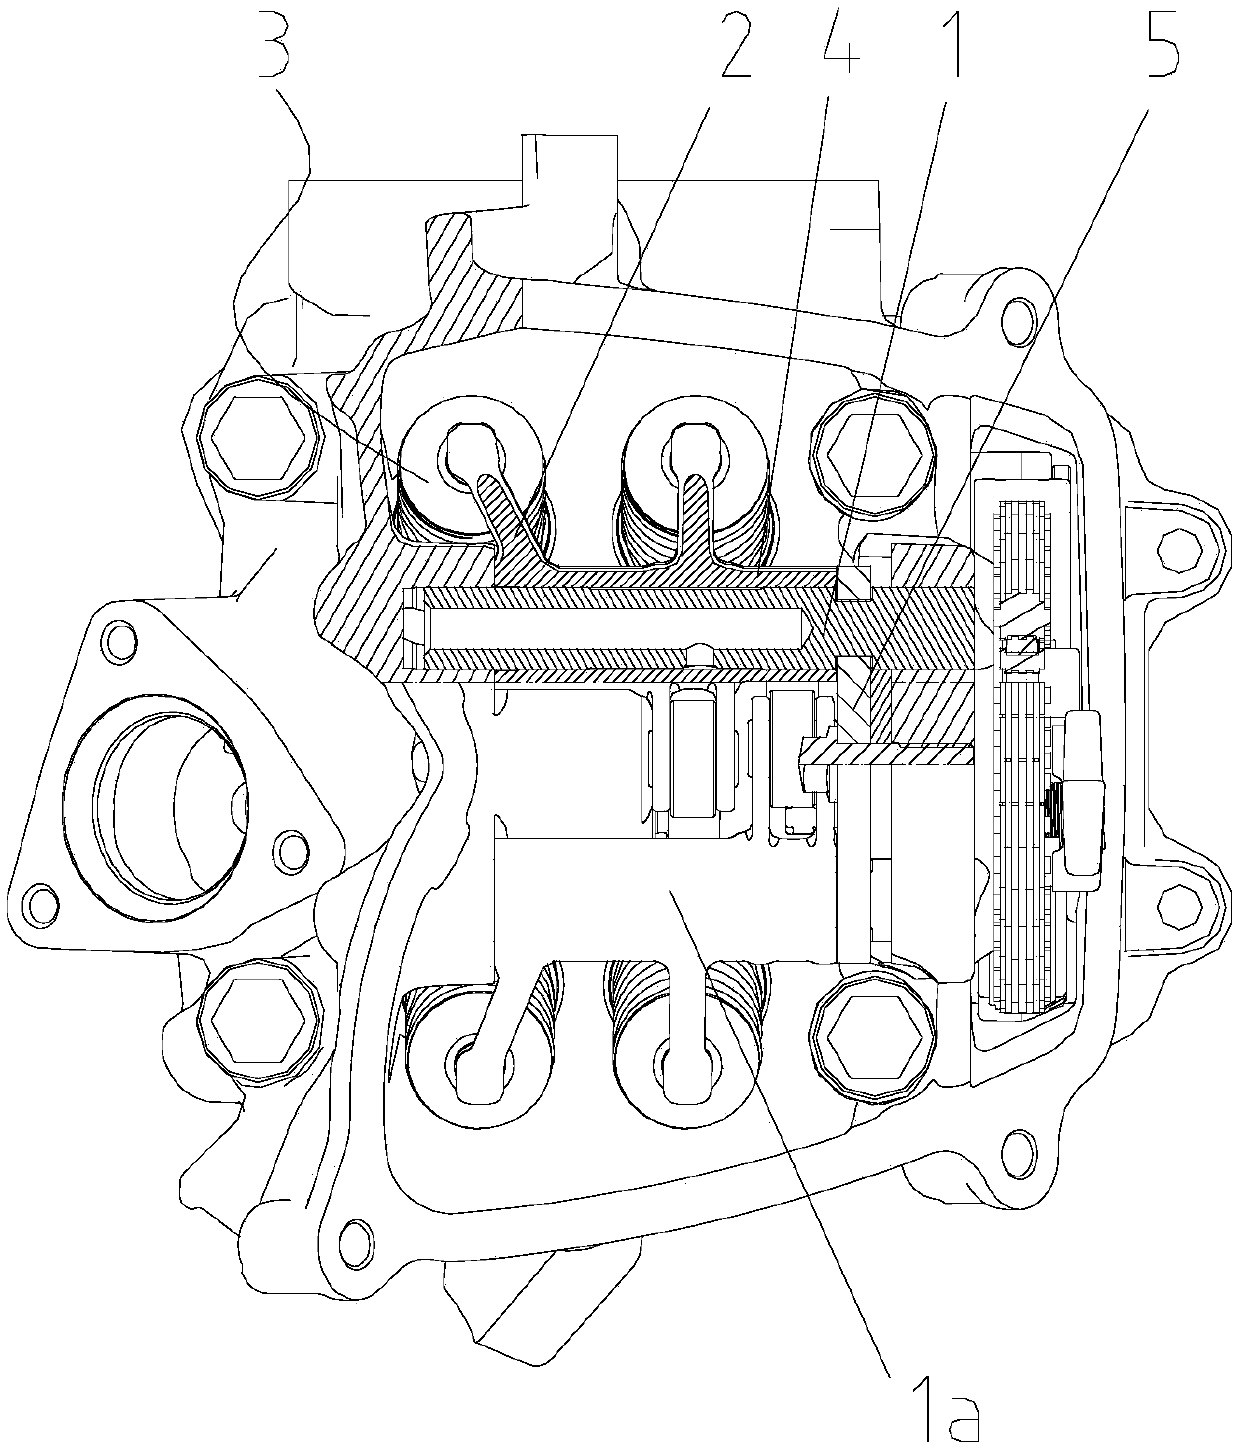 Engine valve mechanism and engine